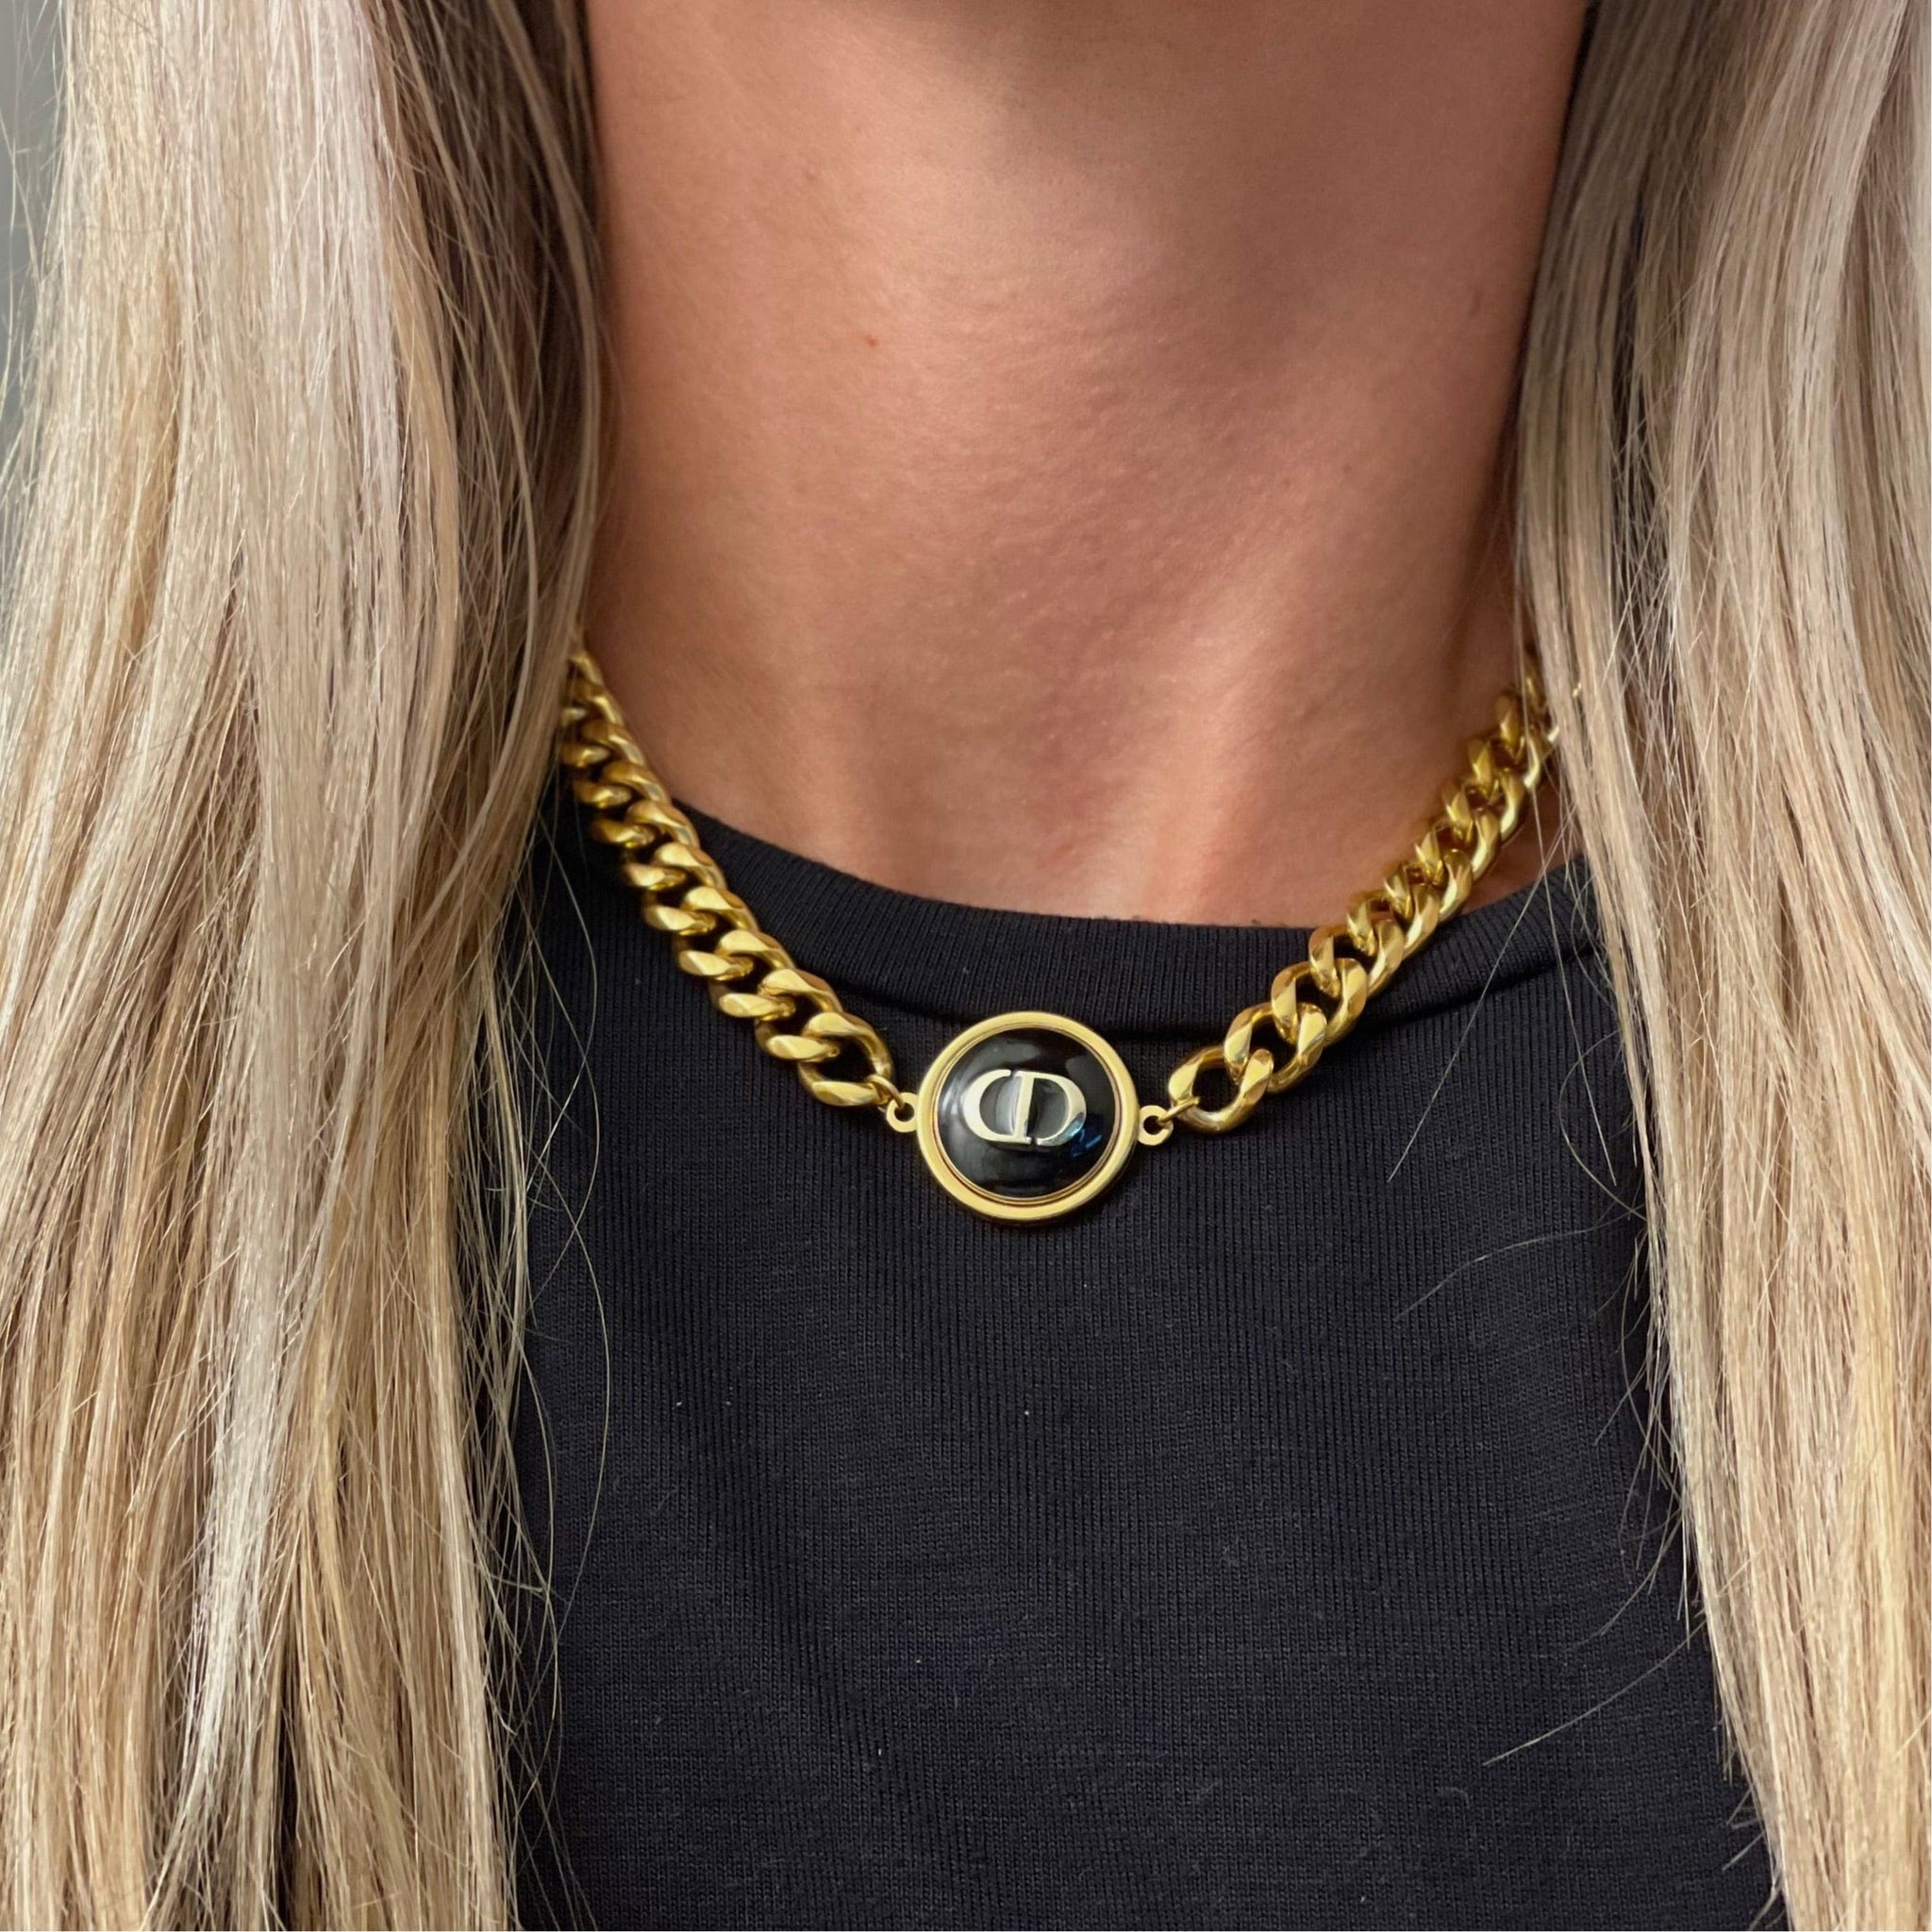 Dior | Jewelry | Dior Gold Necklace Cd Choker New 24 Karat Gold | Poshmark